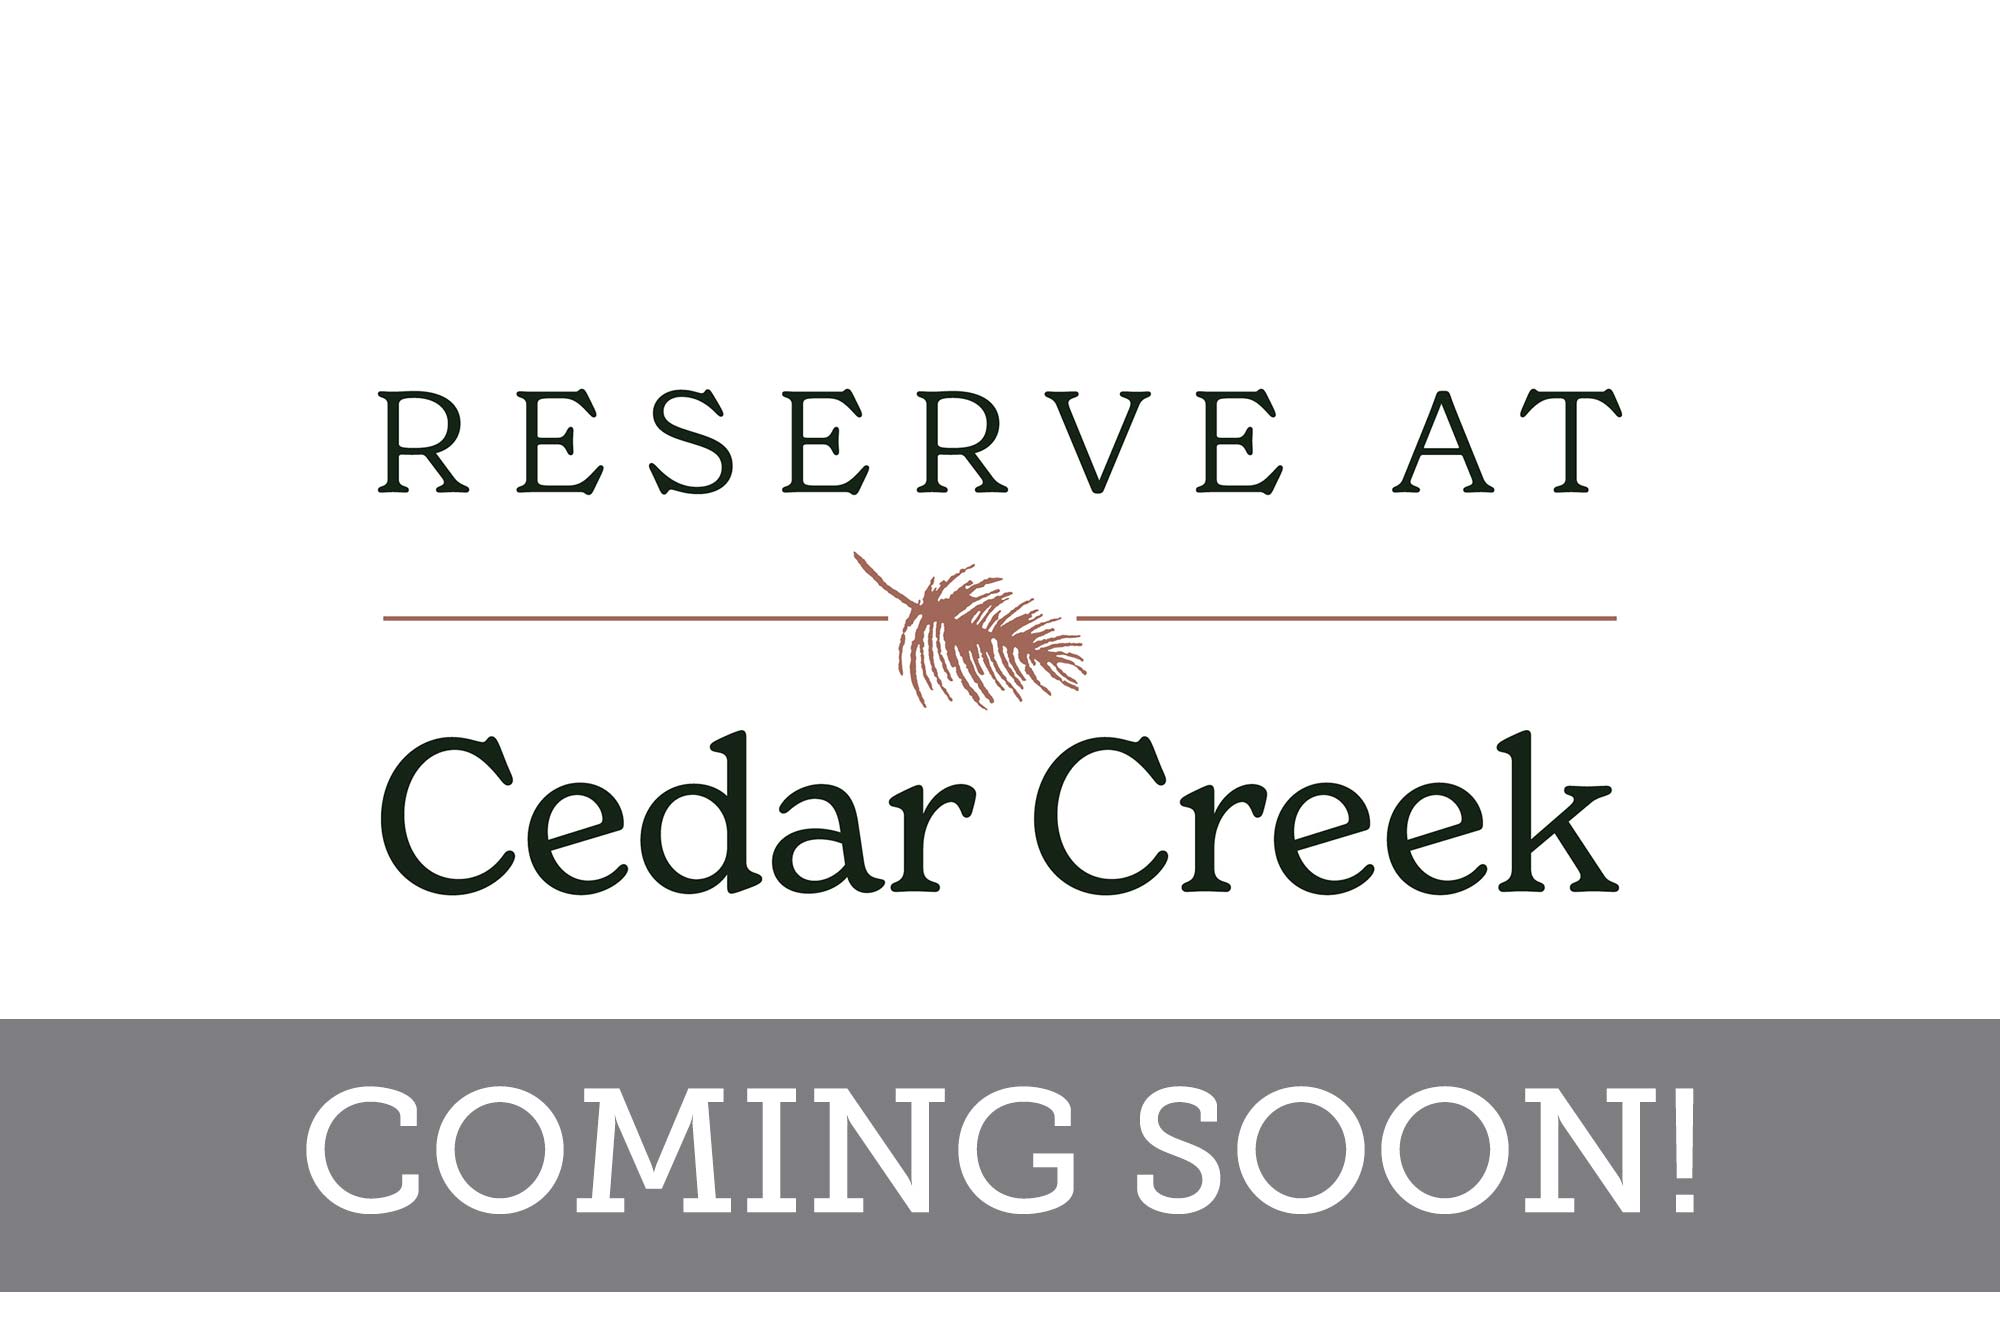 Reserve at Cedar Creek - Coming Soon